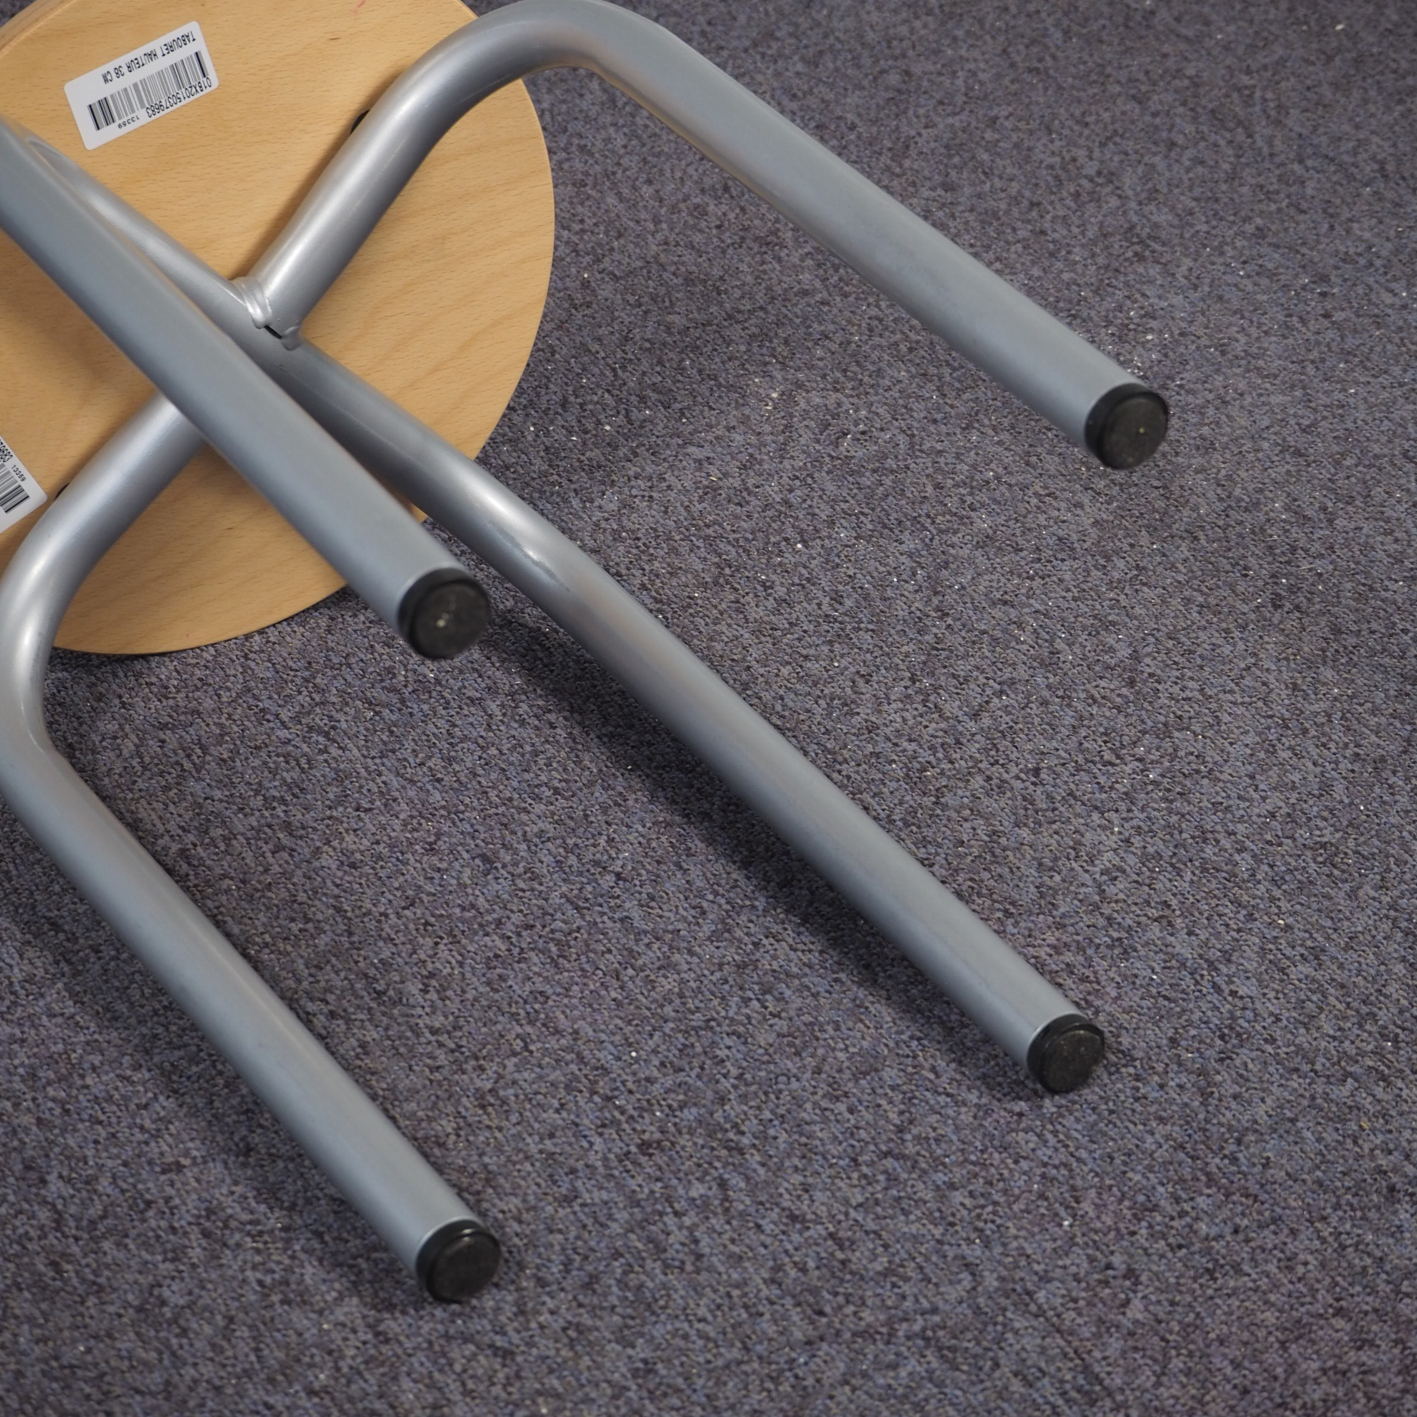 Small school stool with steel legs